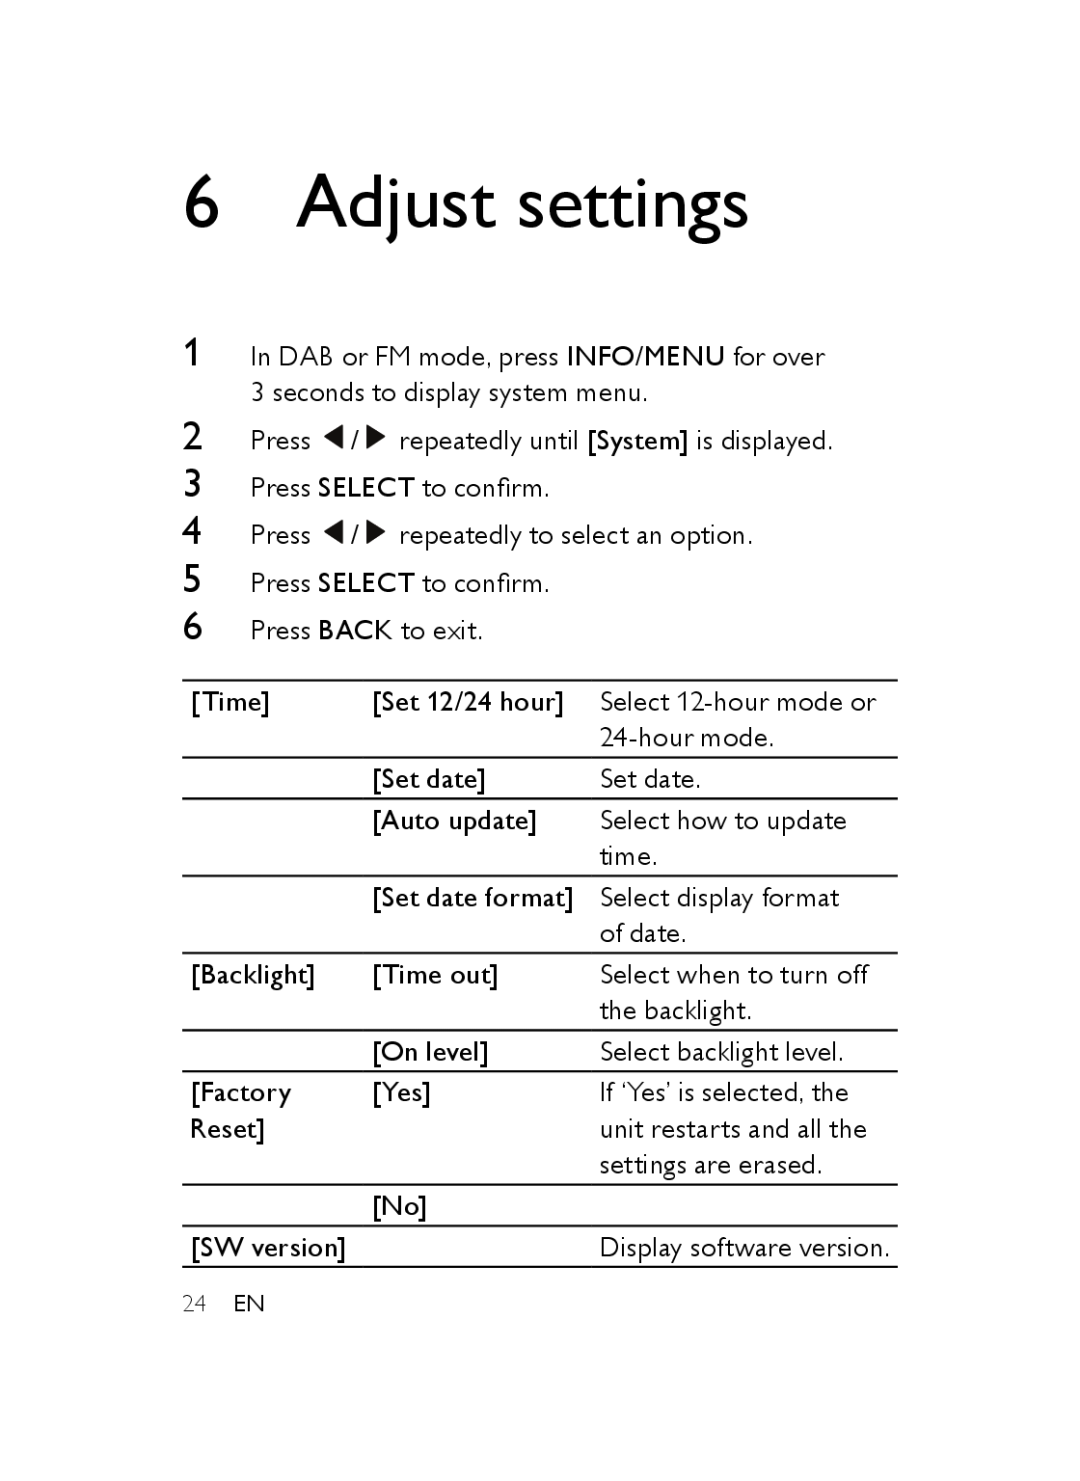 Philips AJB3552/05 user manual Adjust settings, Display software version, 24 EN 